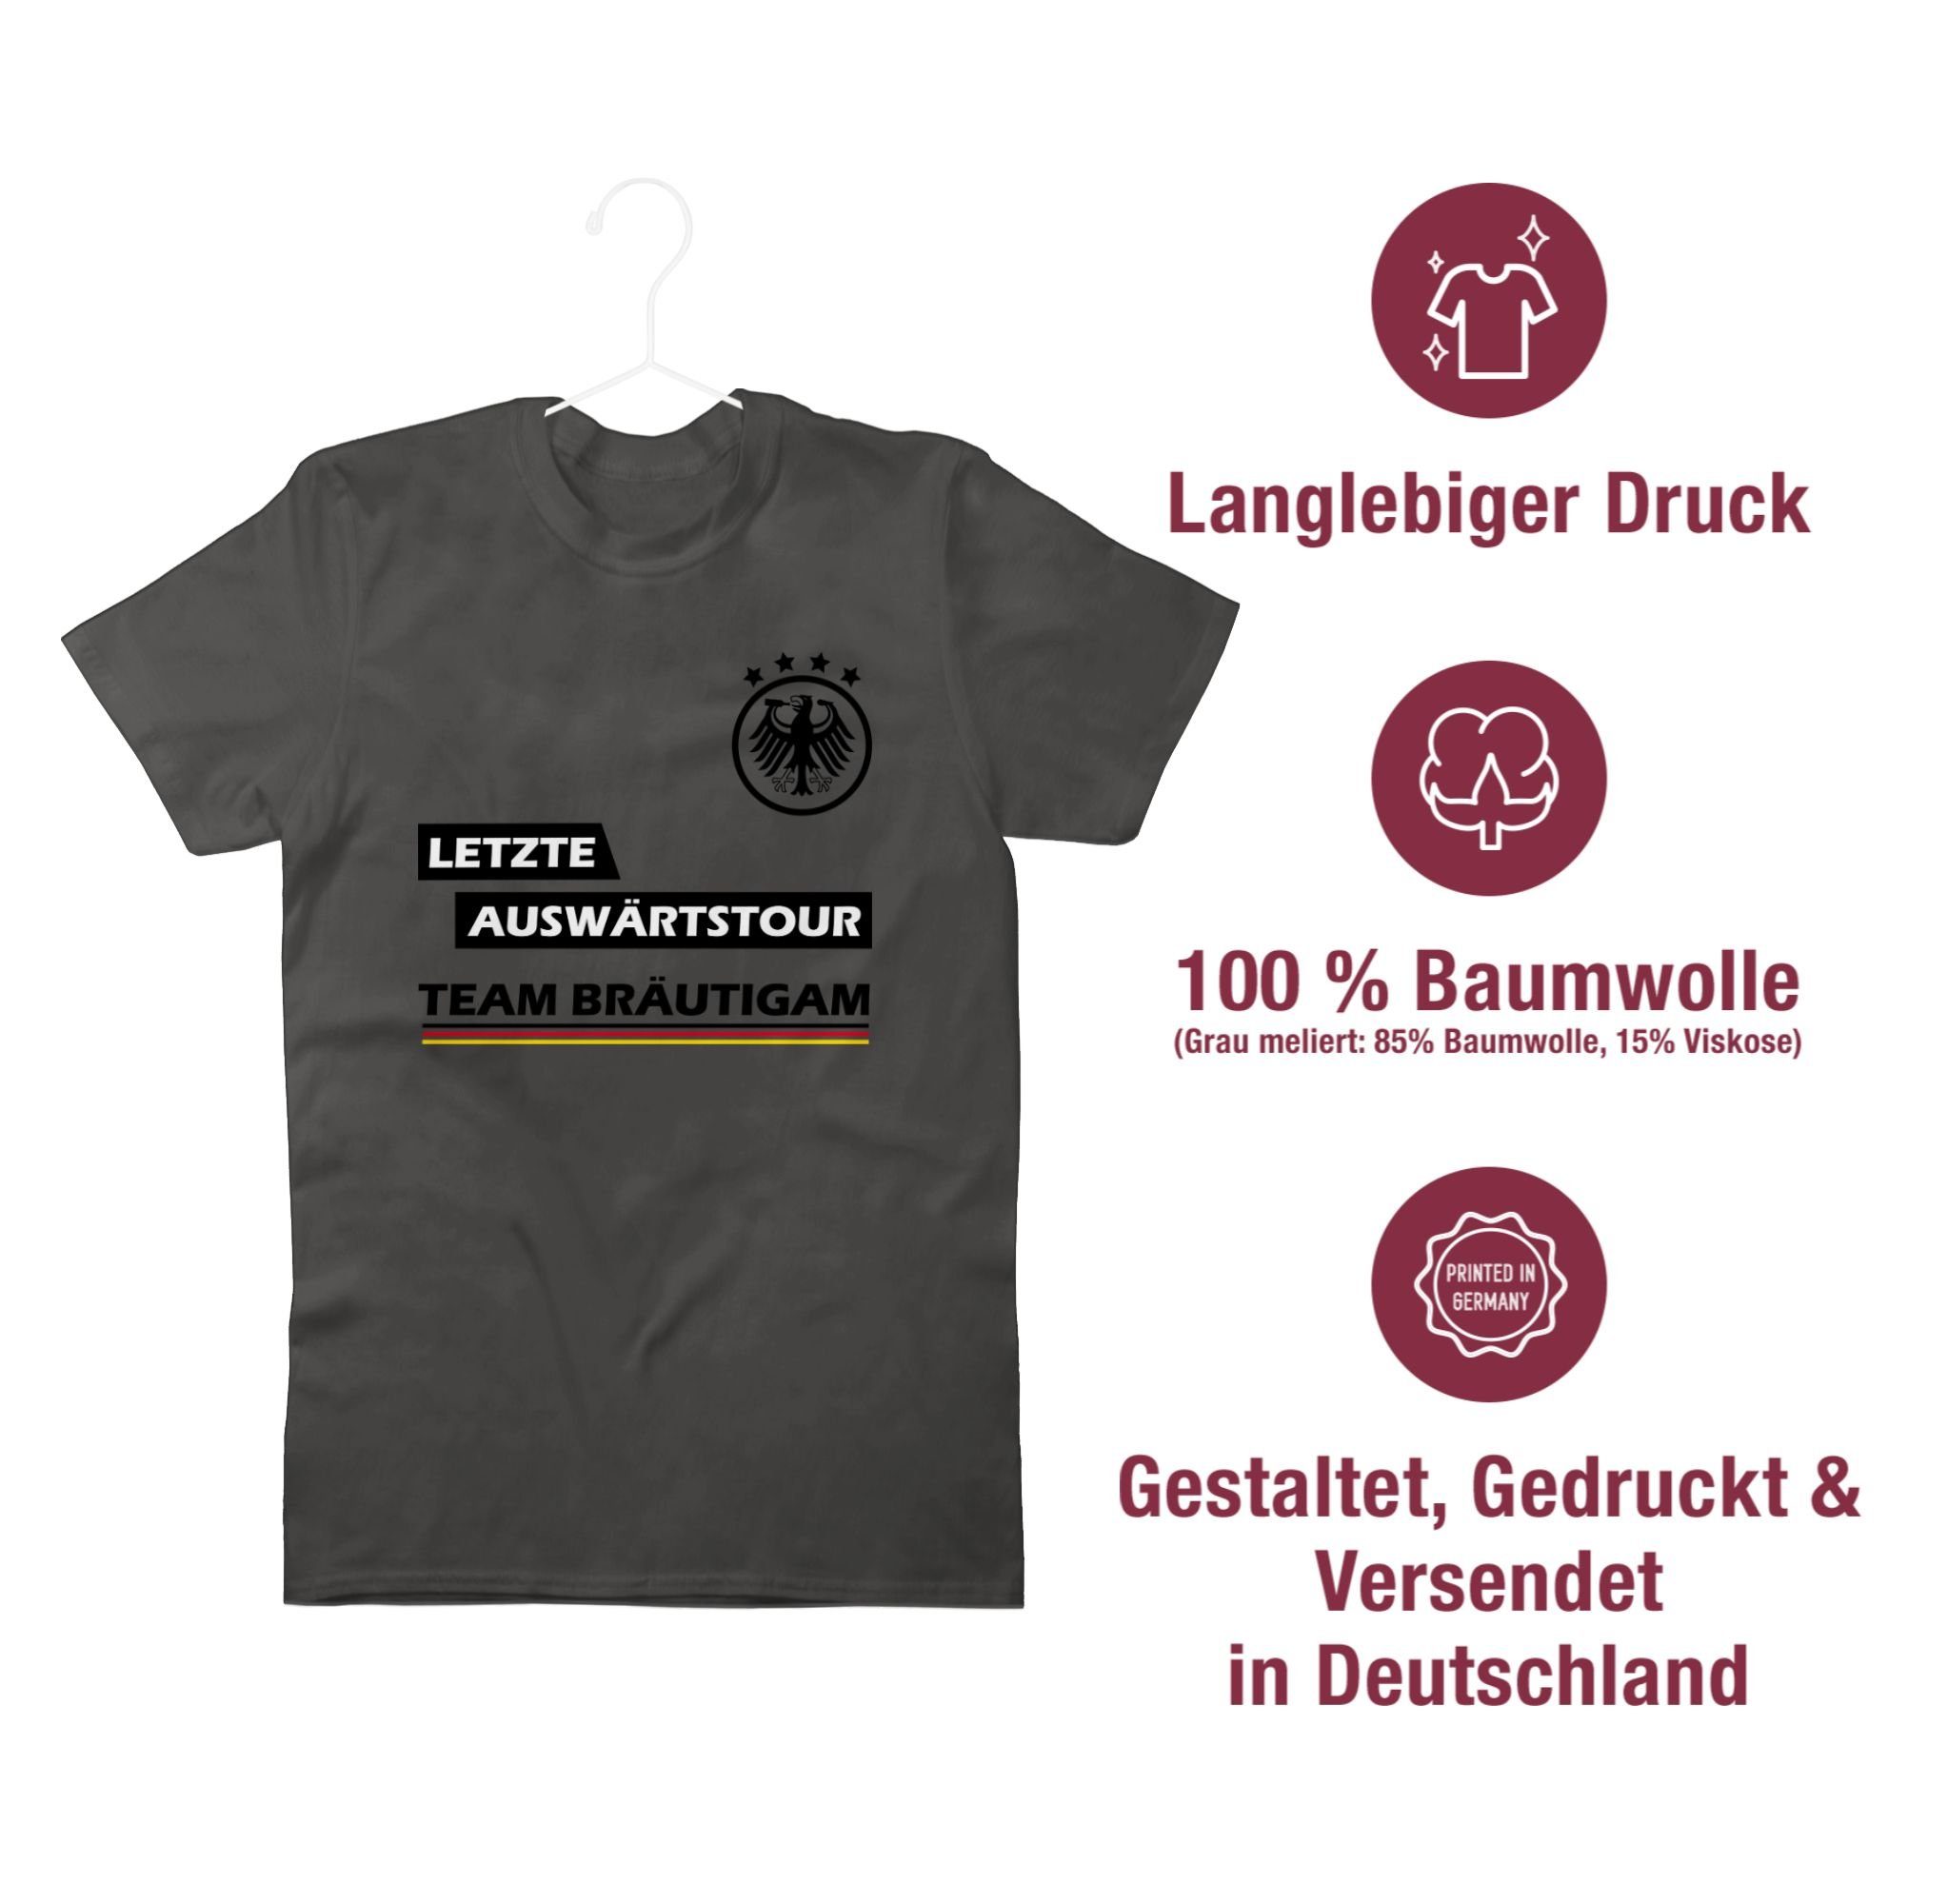 Dunkelgrau T-Shirt Shirtracer Auswärtstour Letzte Bräutigam JGA 2 Männer Team